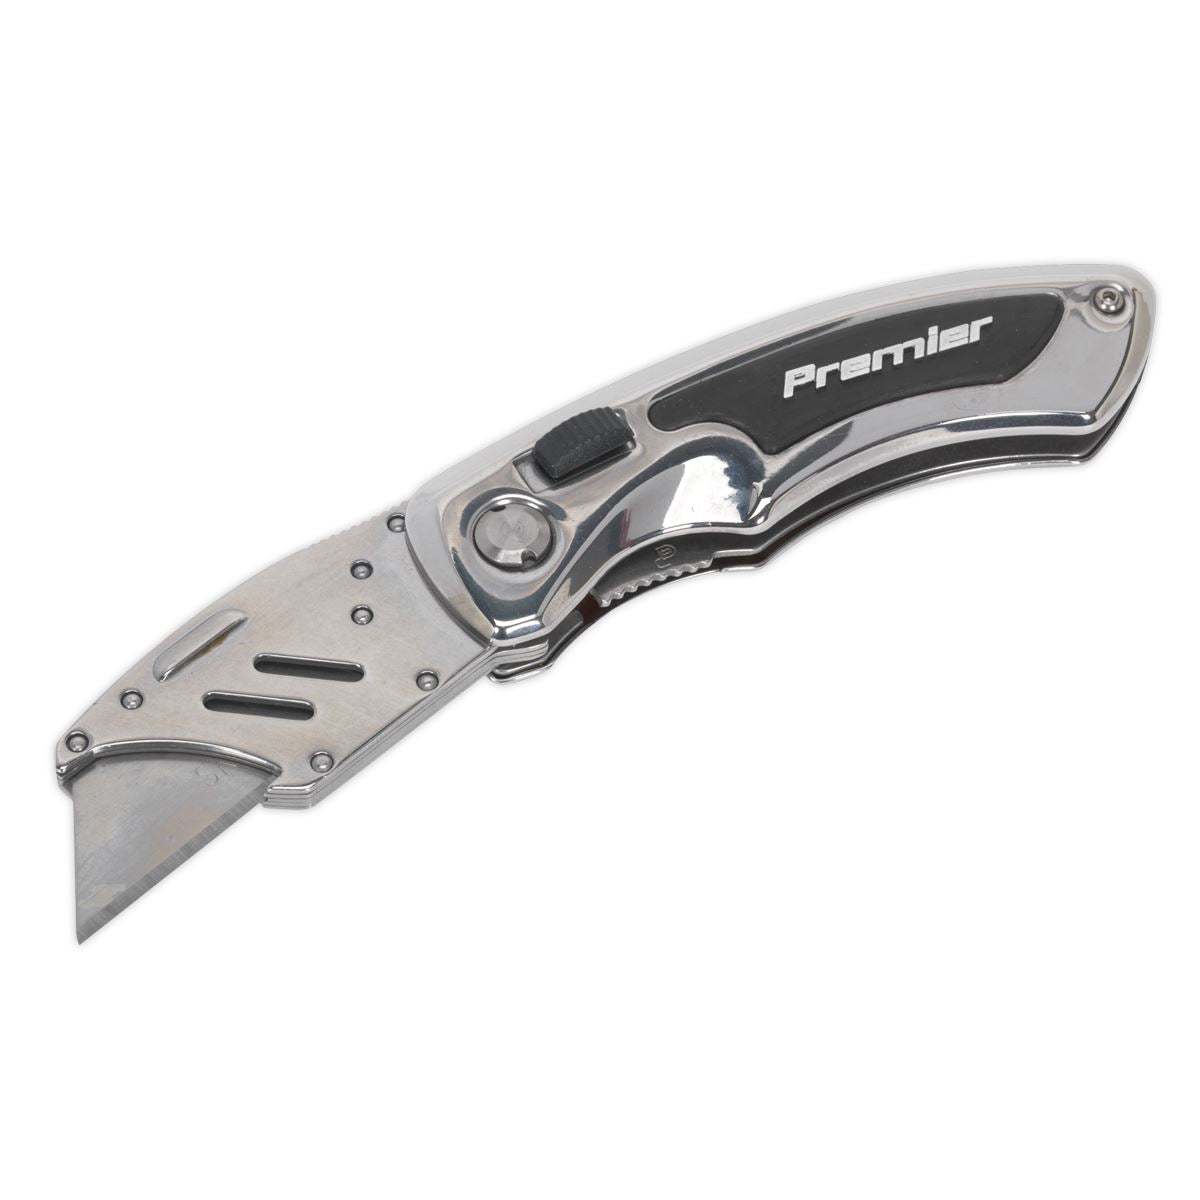 Sealey Premier Locking Pocket Knife with Quick Change Blade